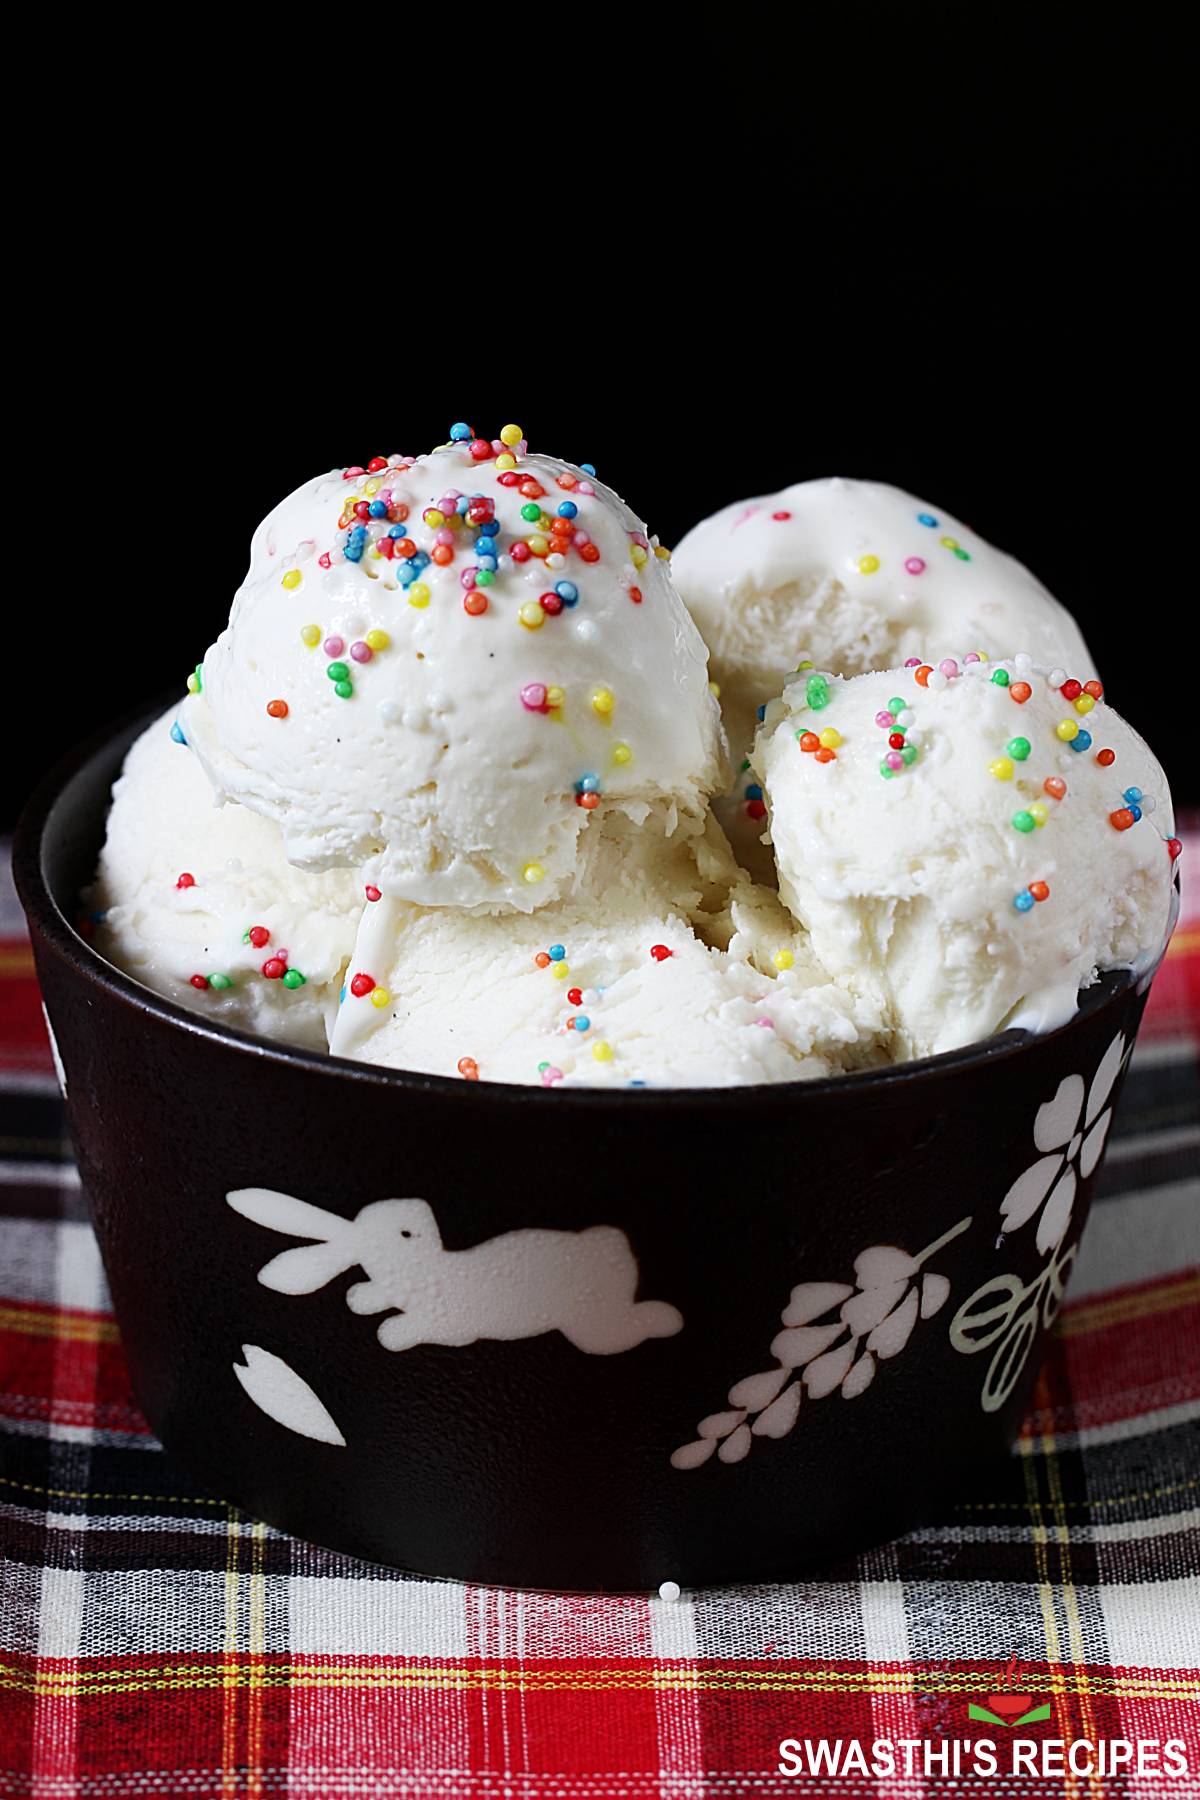 How to Make Homemade Ice Cream 3 Easy Ways, Cooking School